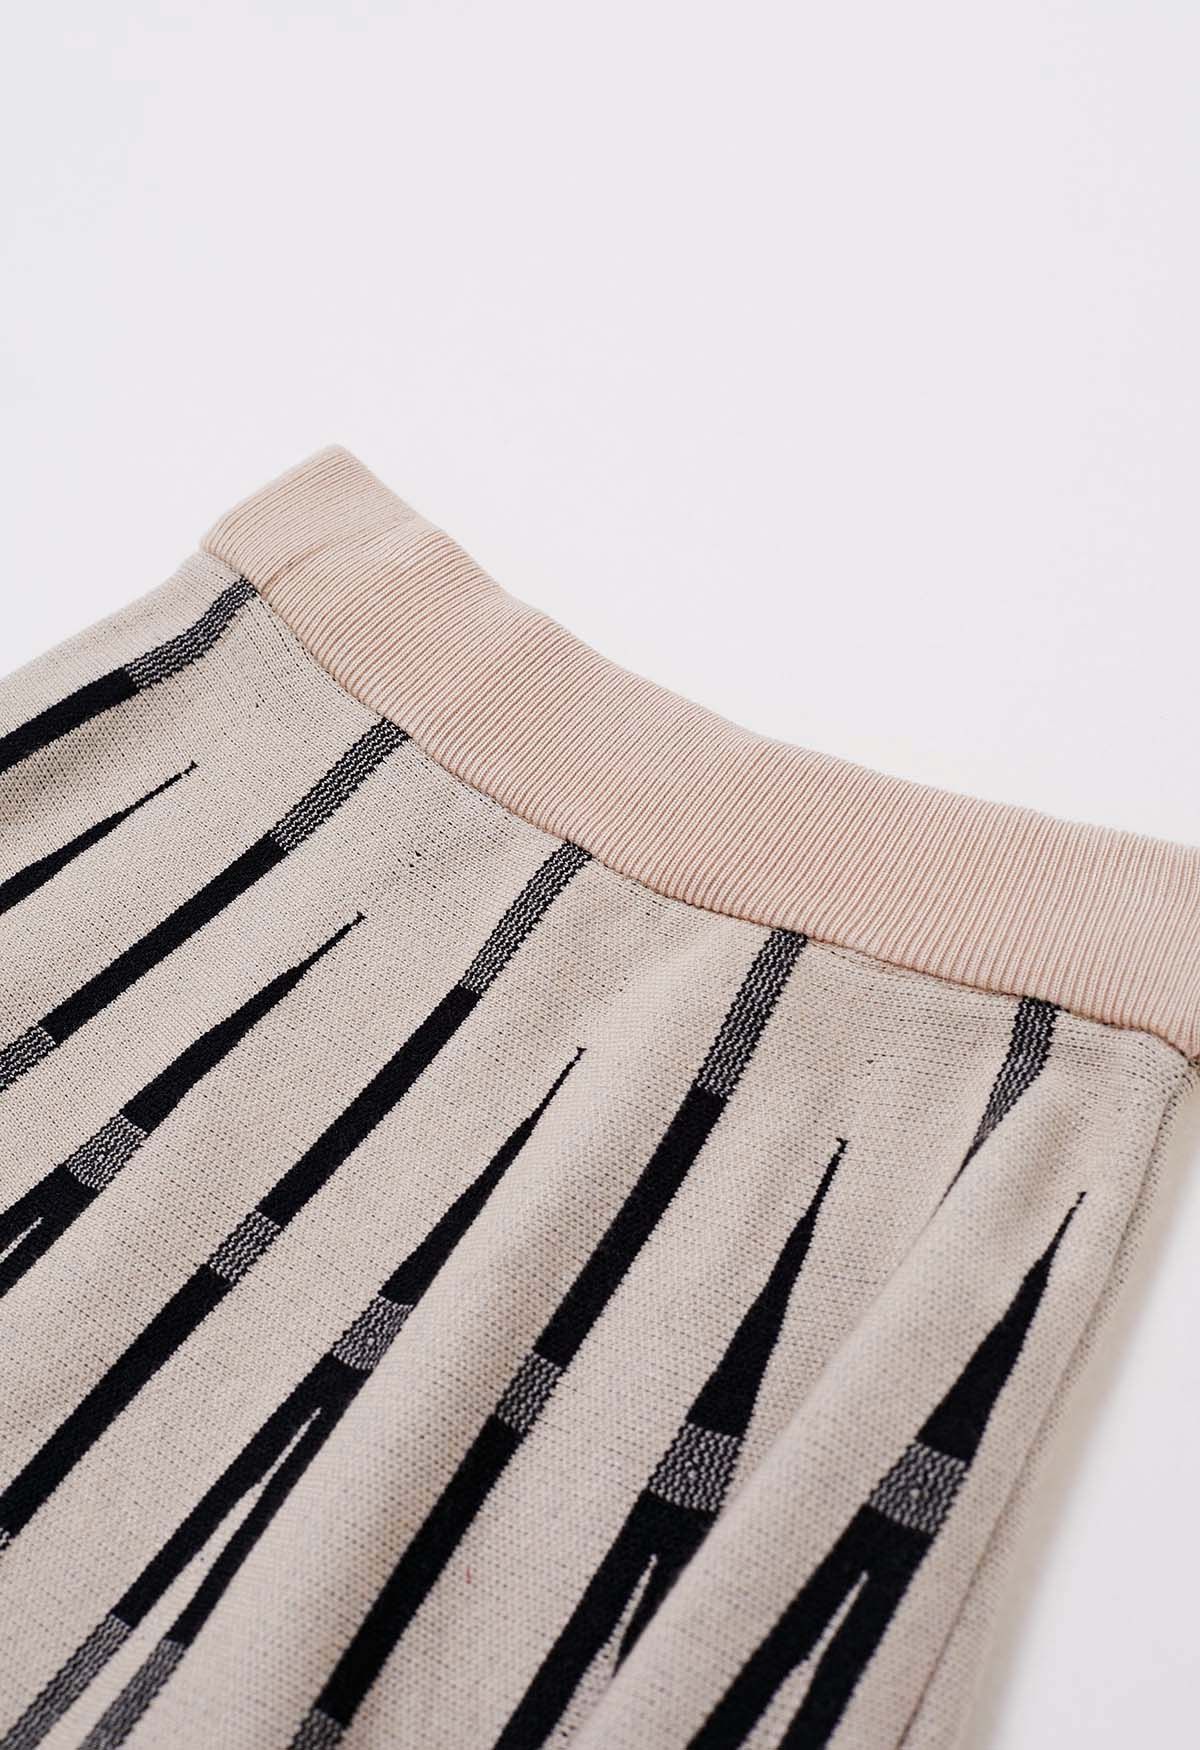 Trendsetting Striped Knit Midi Skirt in Sand